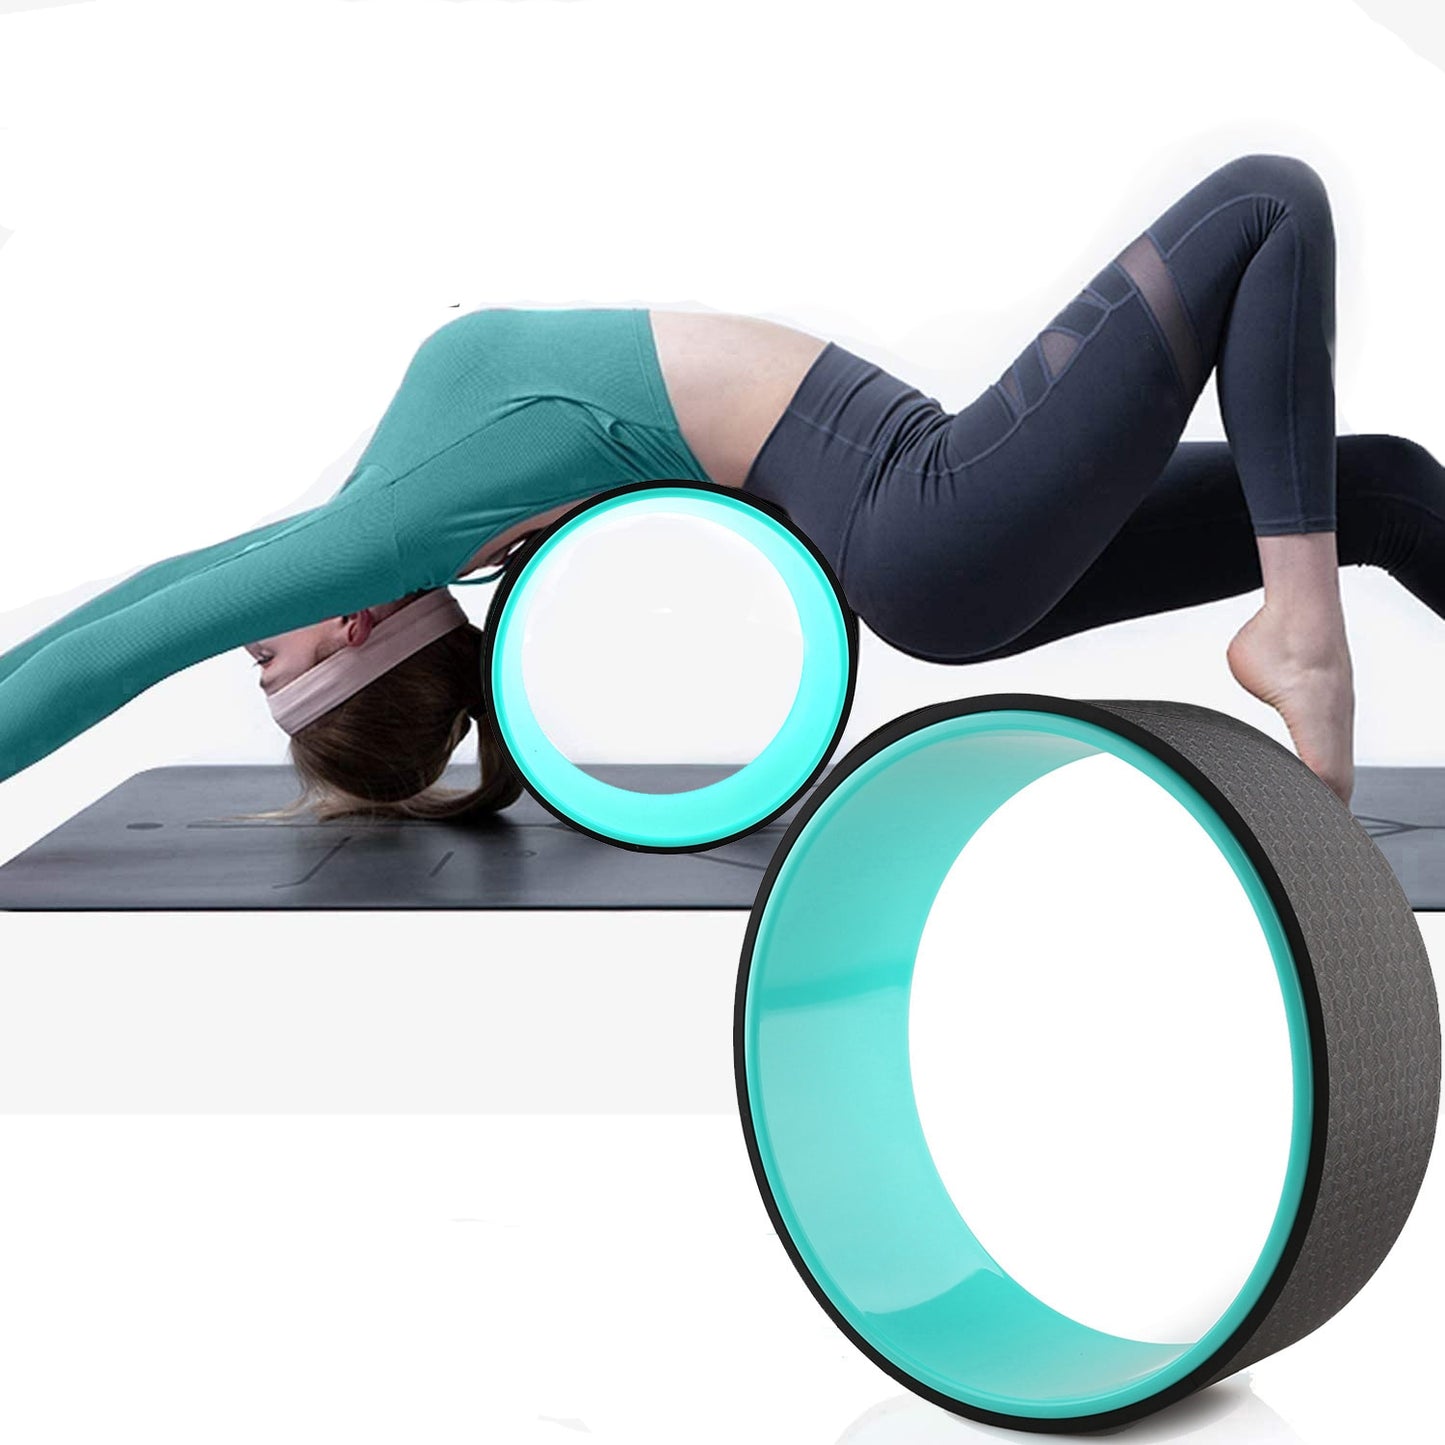 Rise™ - Yoga Wheel